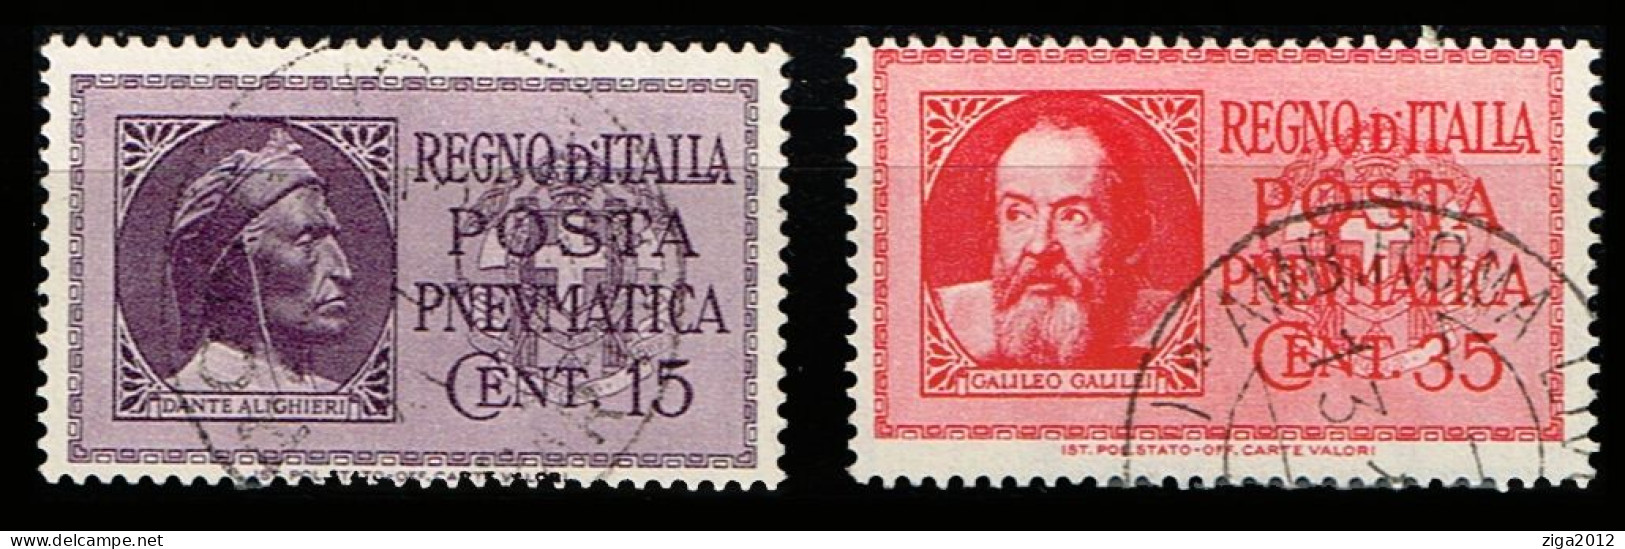 ITALY 1933 SERIE COMPLETA DEI FRANCOBOLLI DI POSTA PNEUMATICA - ANNULLATI - Poste Pneumatique